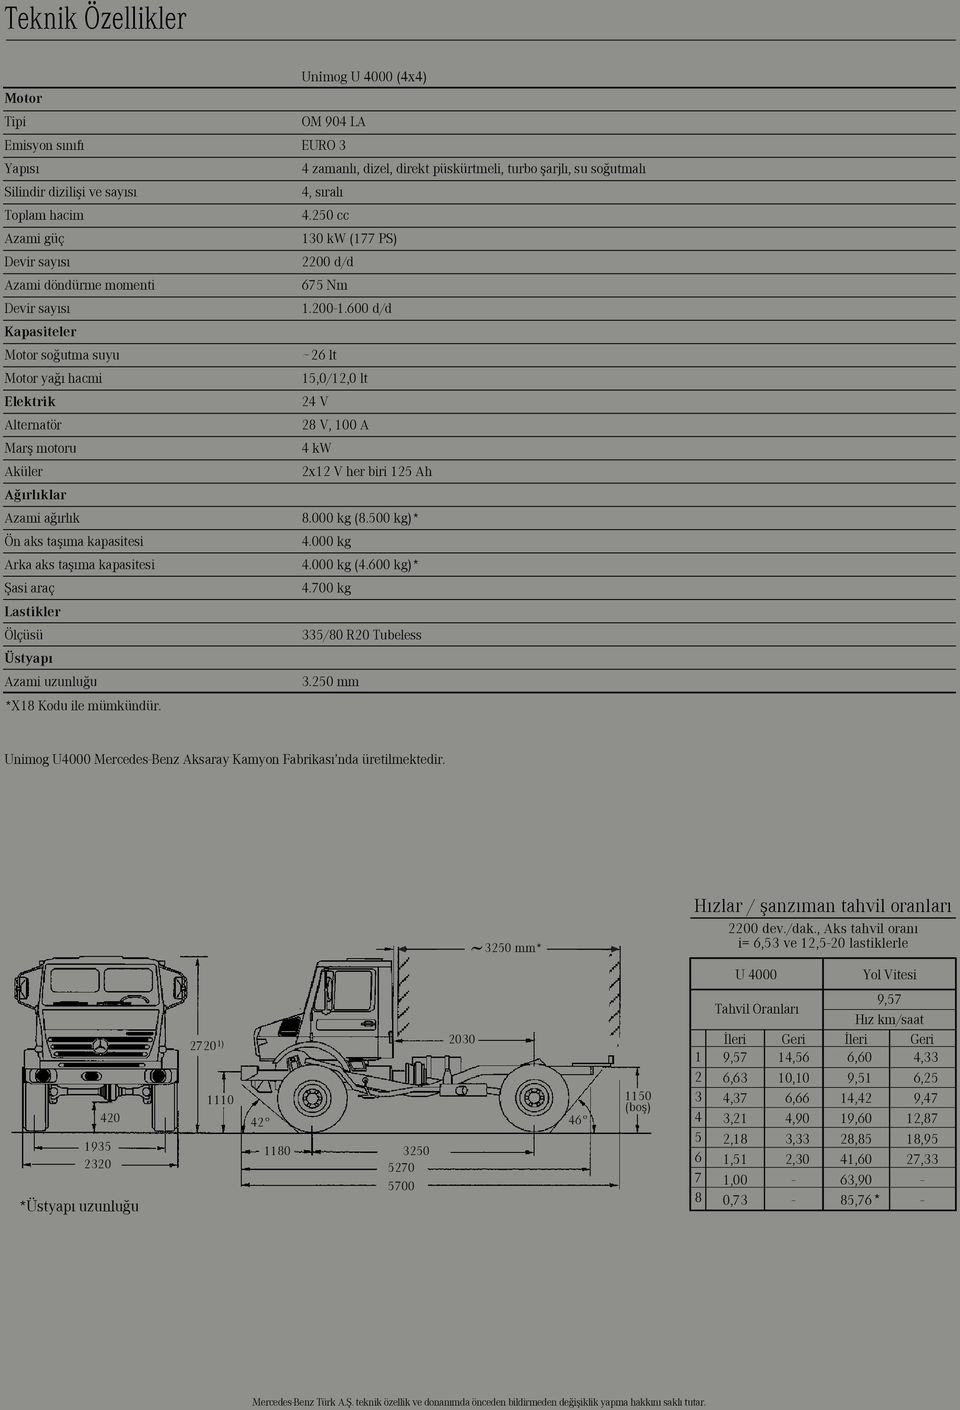 Unimog U 4000 (4x4) OM 904 LA EURO 3 4 zamanl, dizel, direkt püskürtmeli, turbo flarjl, su so utmal 4, s ral 4.250 cc 130 kw (177 PS) 2200 d/d 675 Nm 1.200-1.